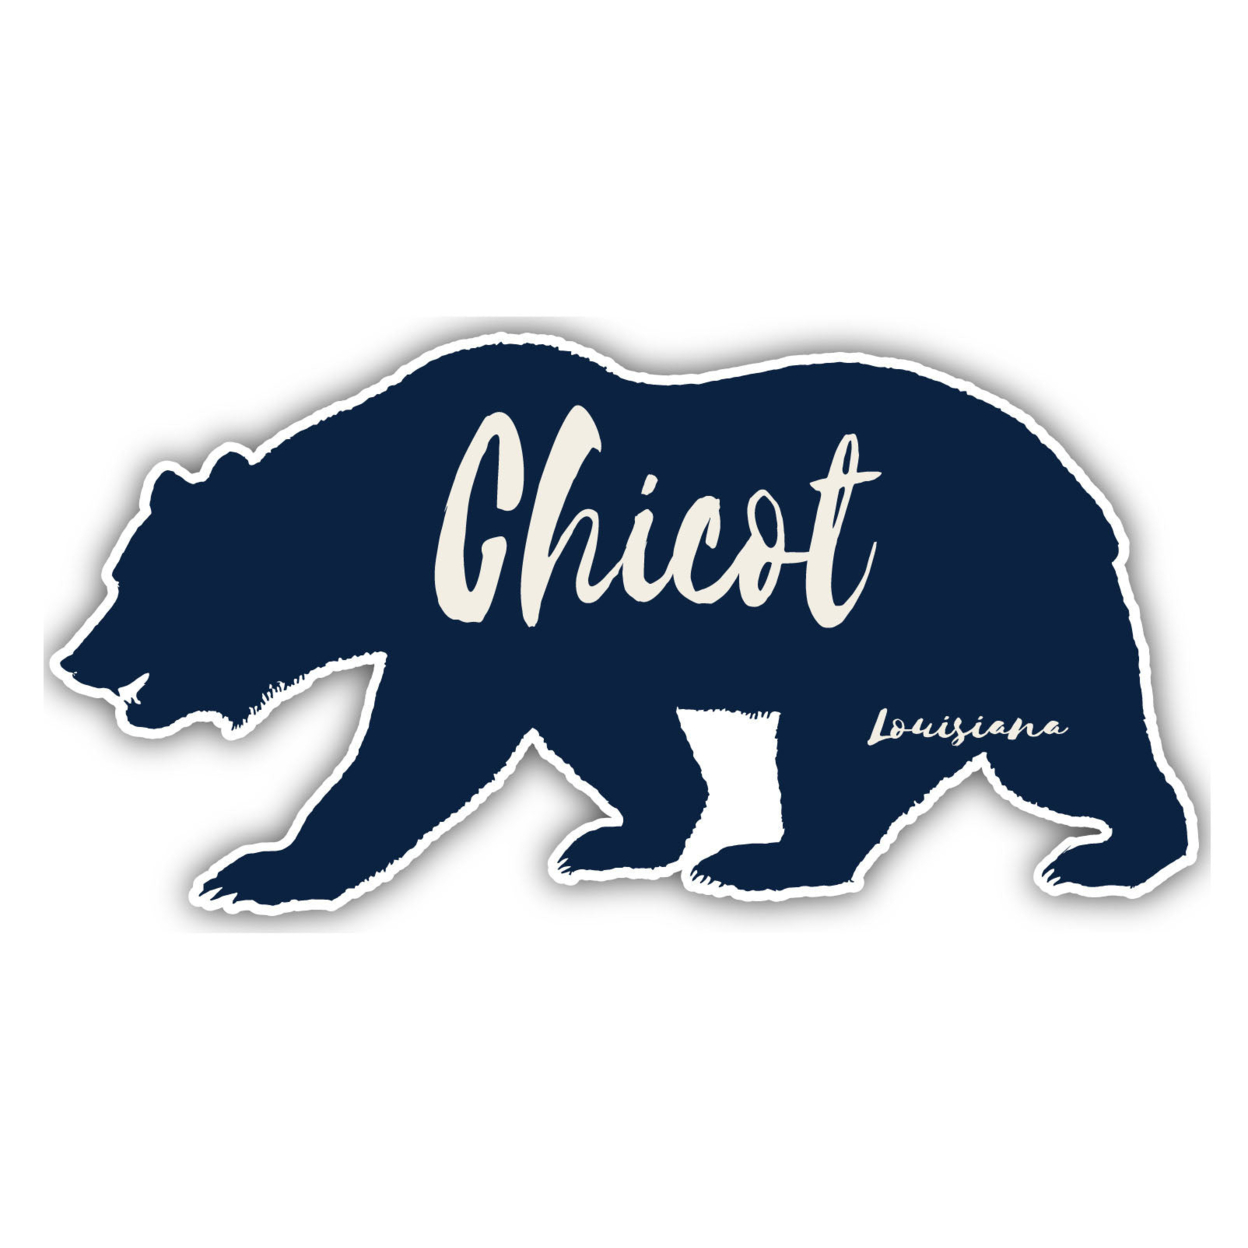 Chicot Louisiana Souvenir Decorative Stickers (Choose Theme And Size) - Single Unit, 6-Inch, Bear